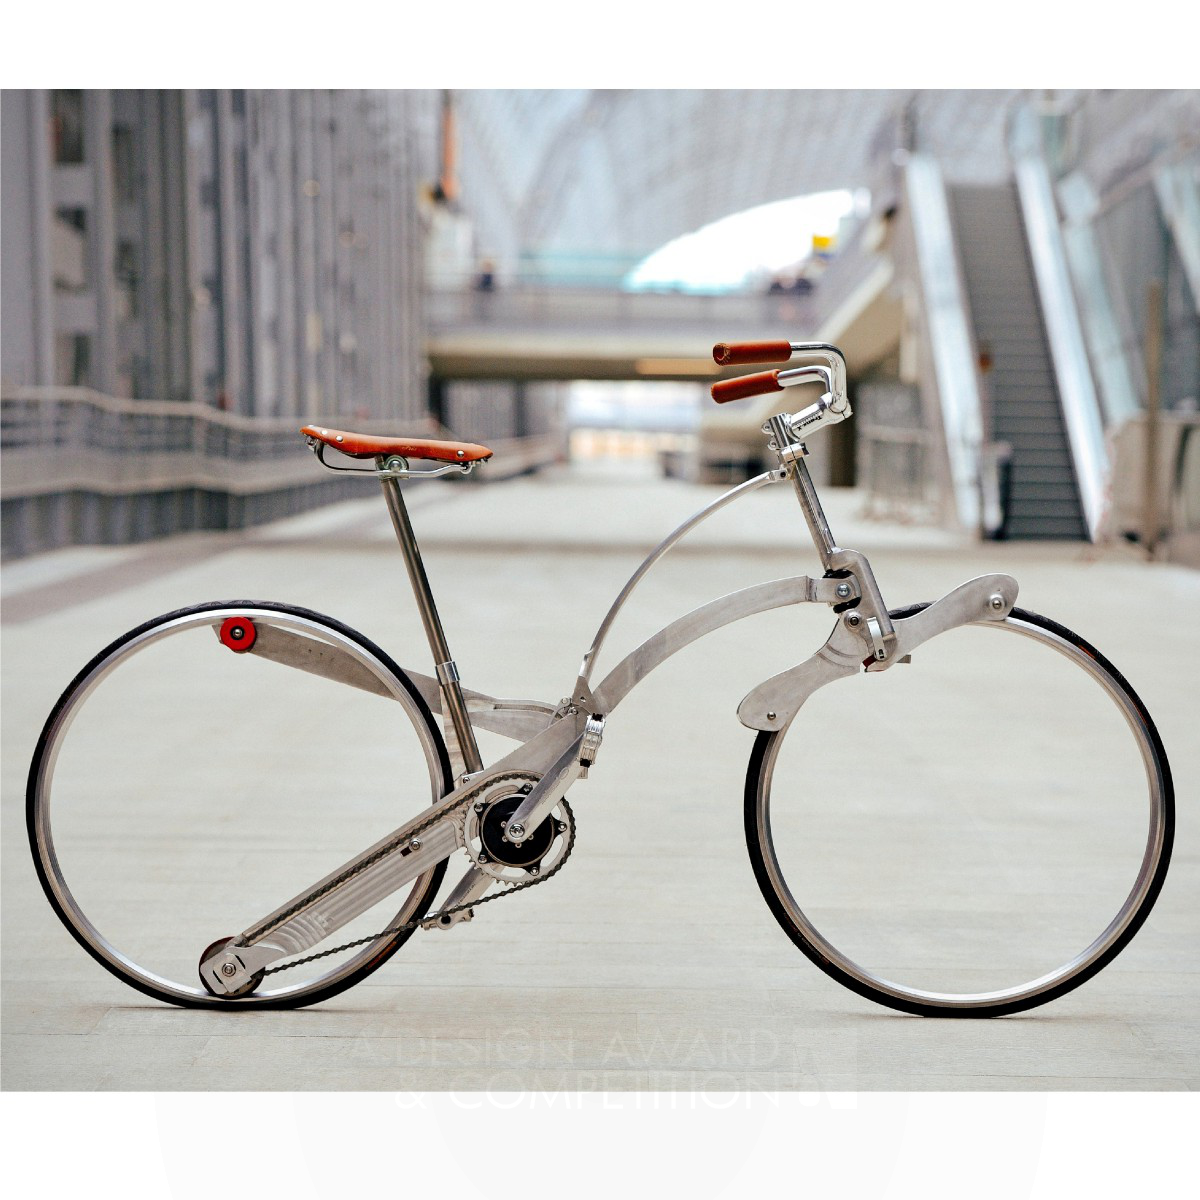 Gianluca Sada Hubless Foldable Bike